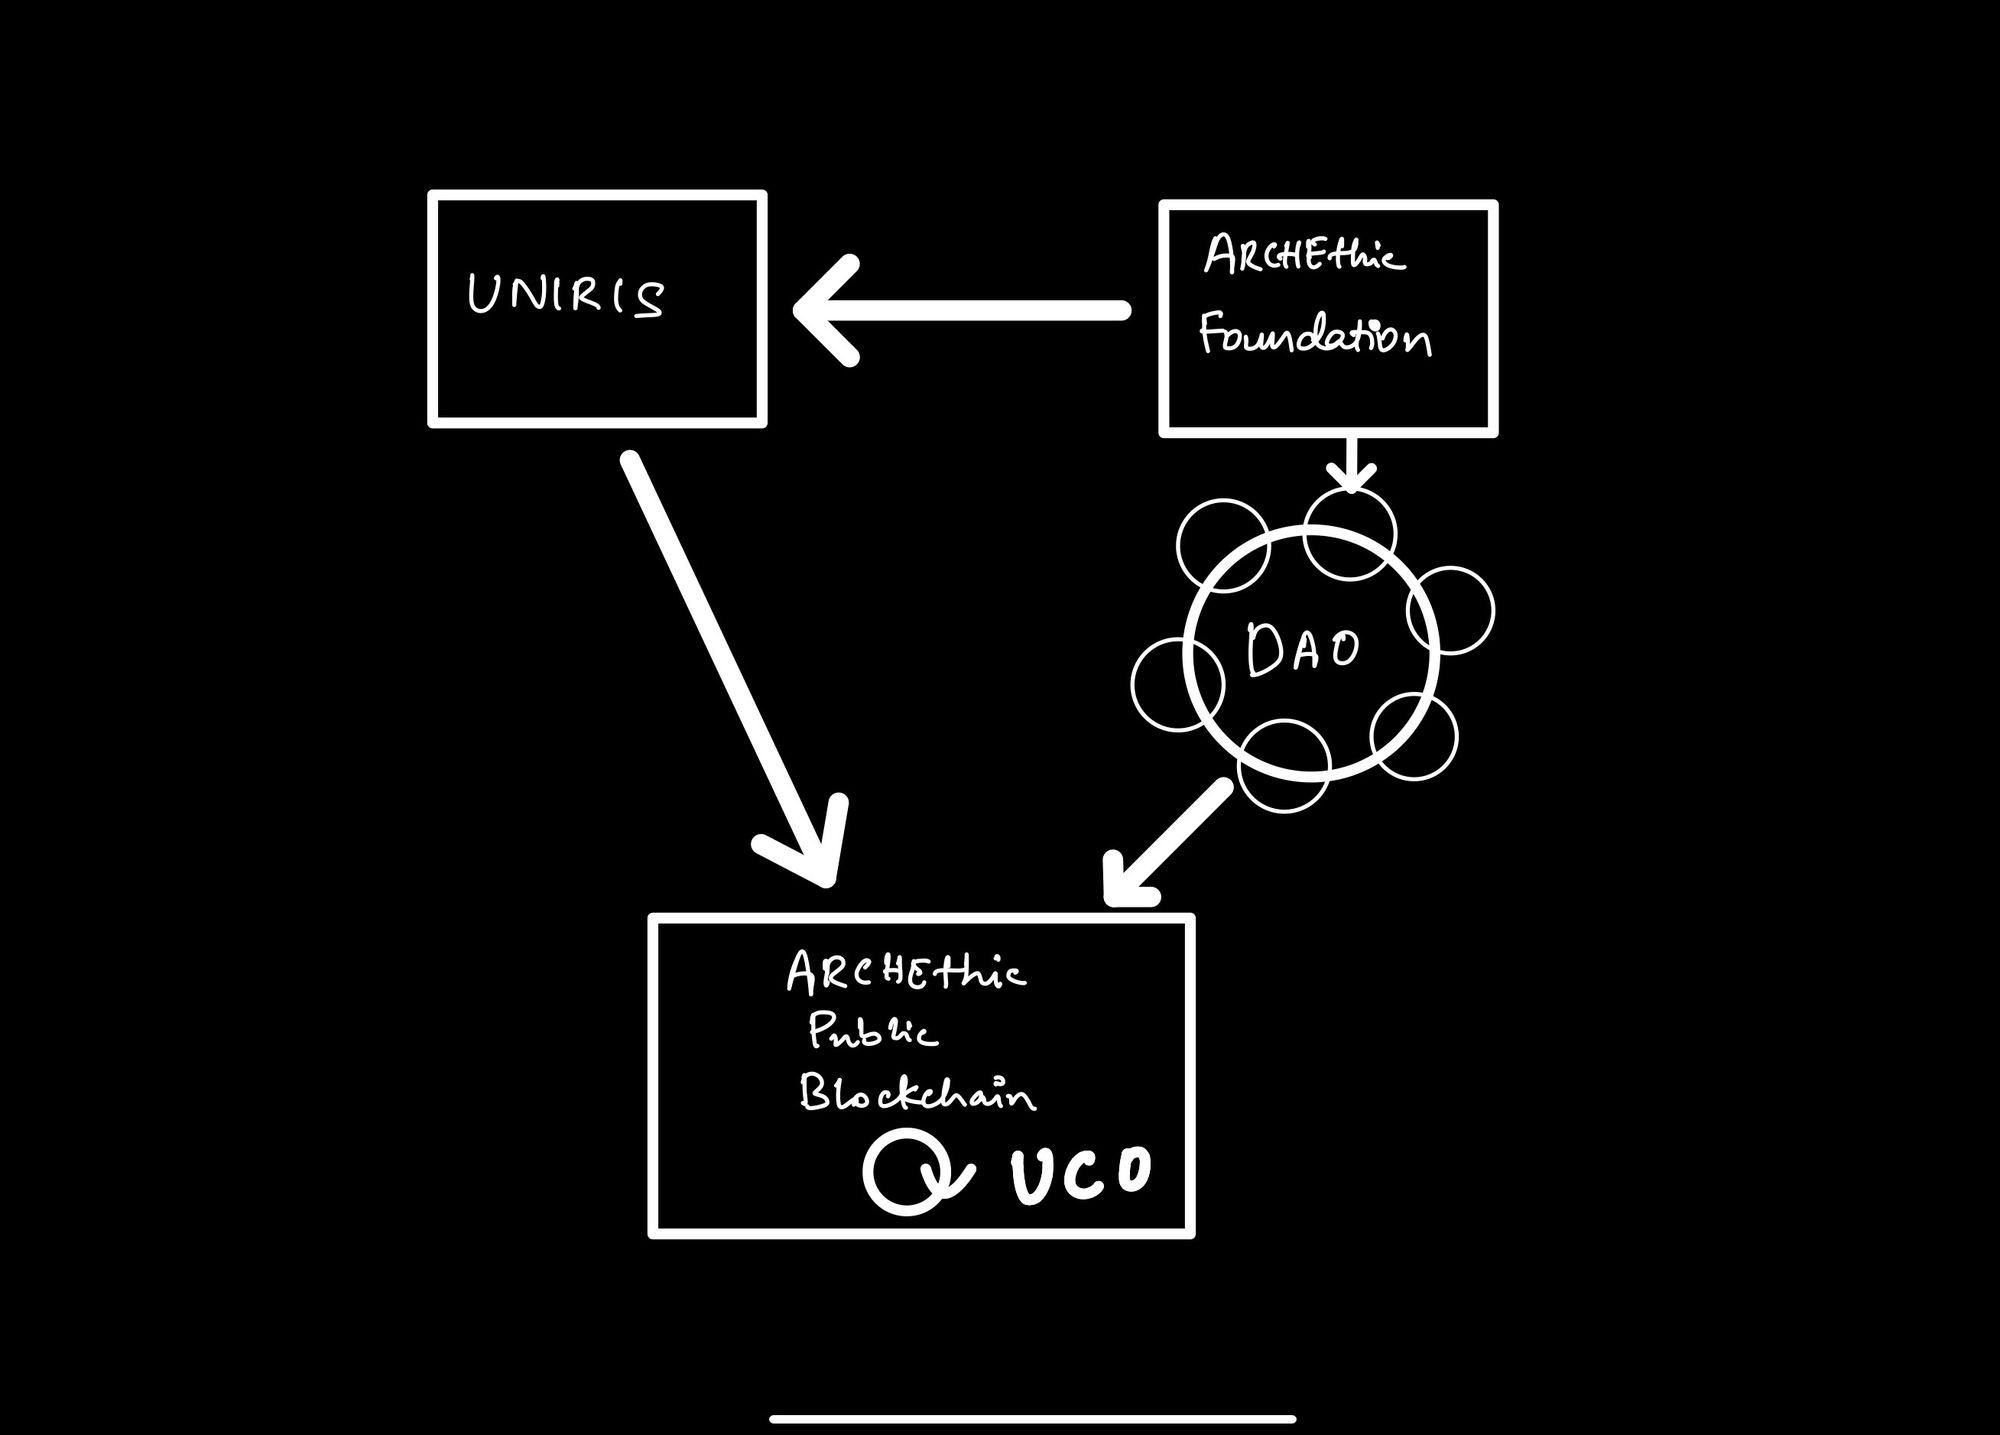 What is Archethic Public Blockchain, UCO, Archethic Foundation, Uniris?